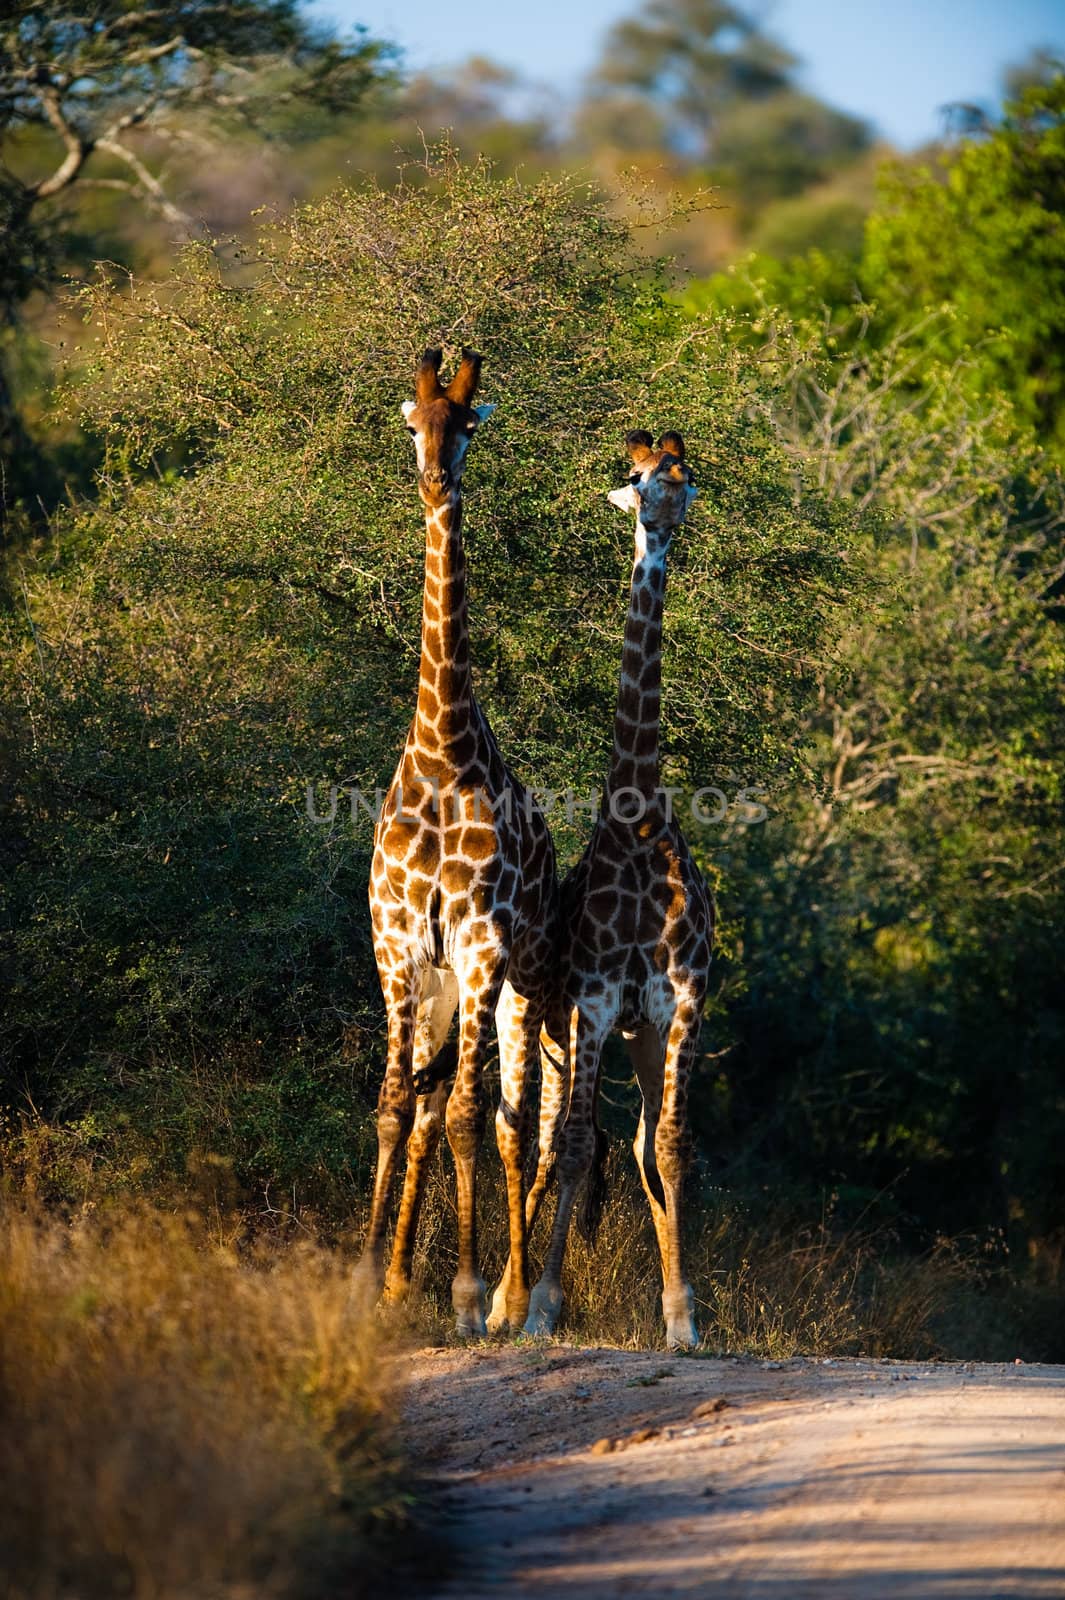 Two giraffes (Giraffa camelopardalis) near Kruger National Park